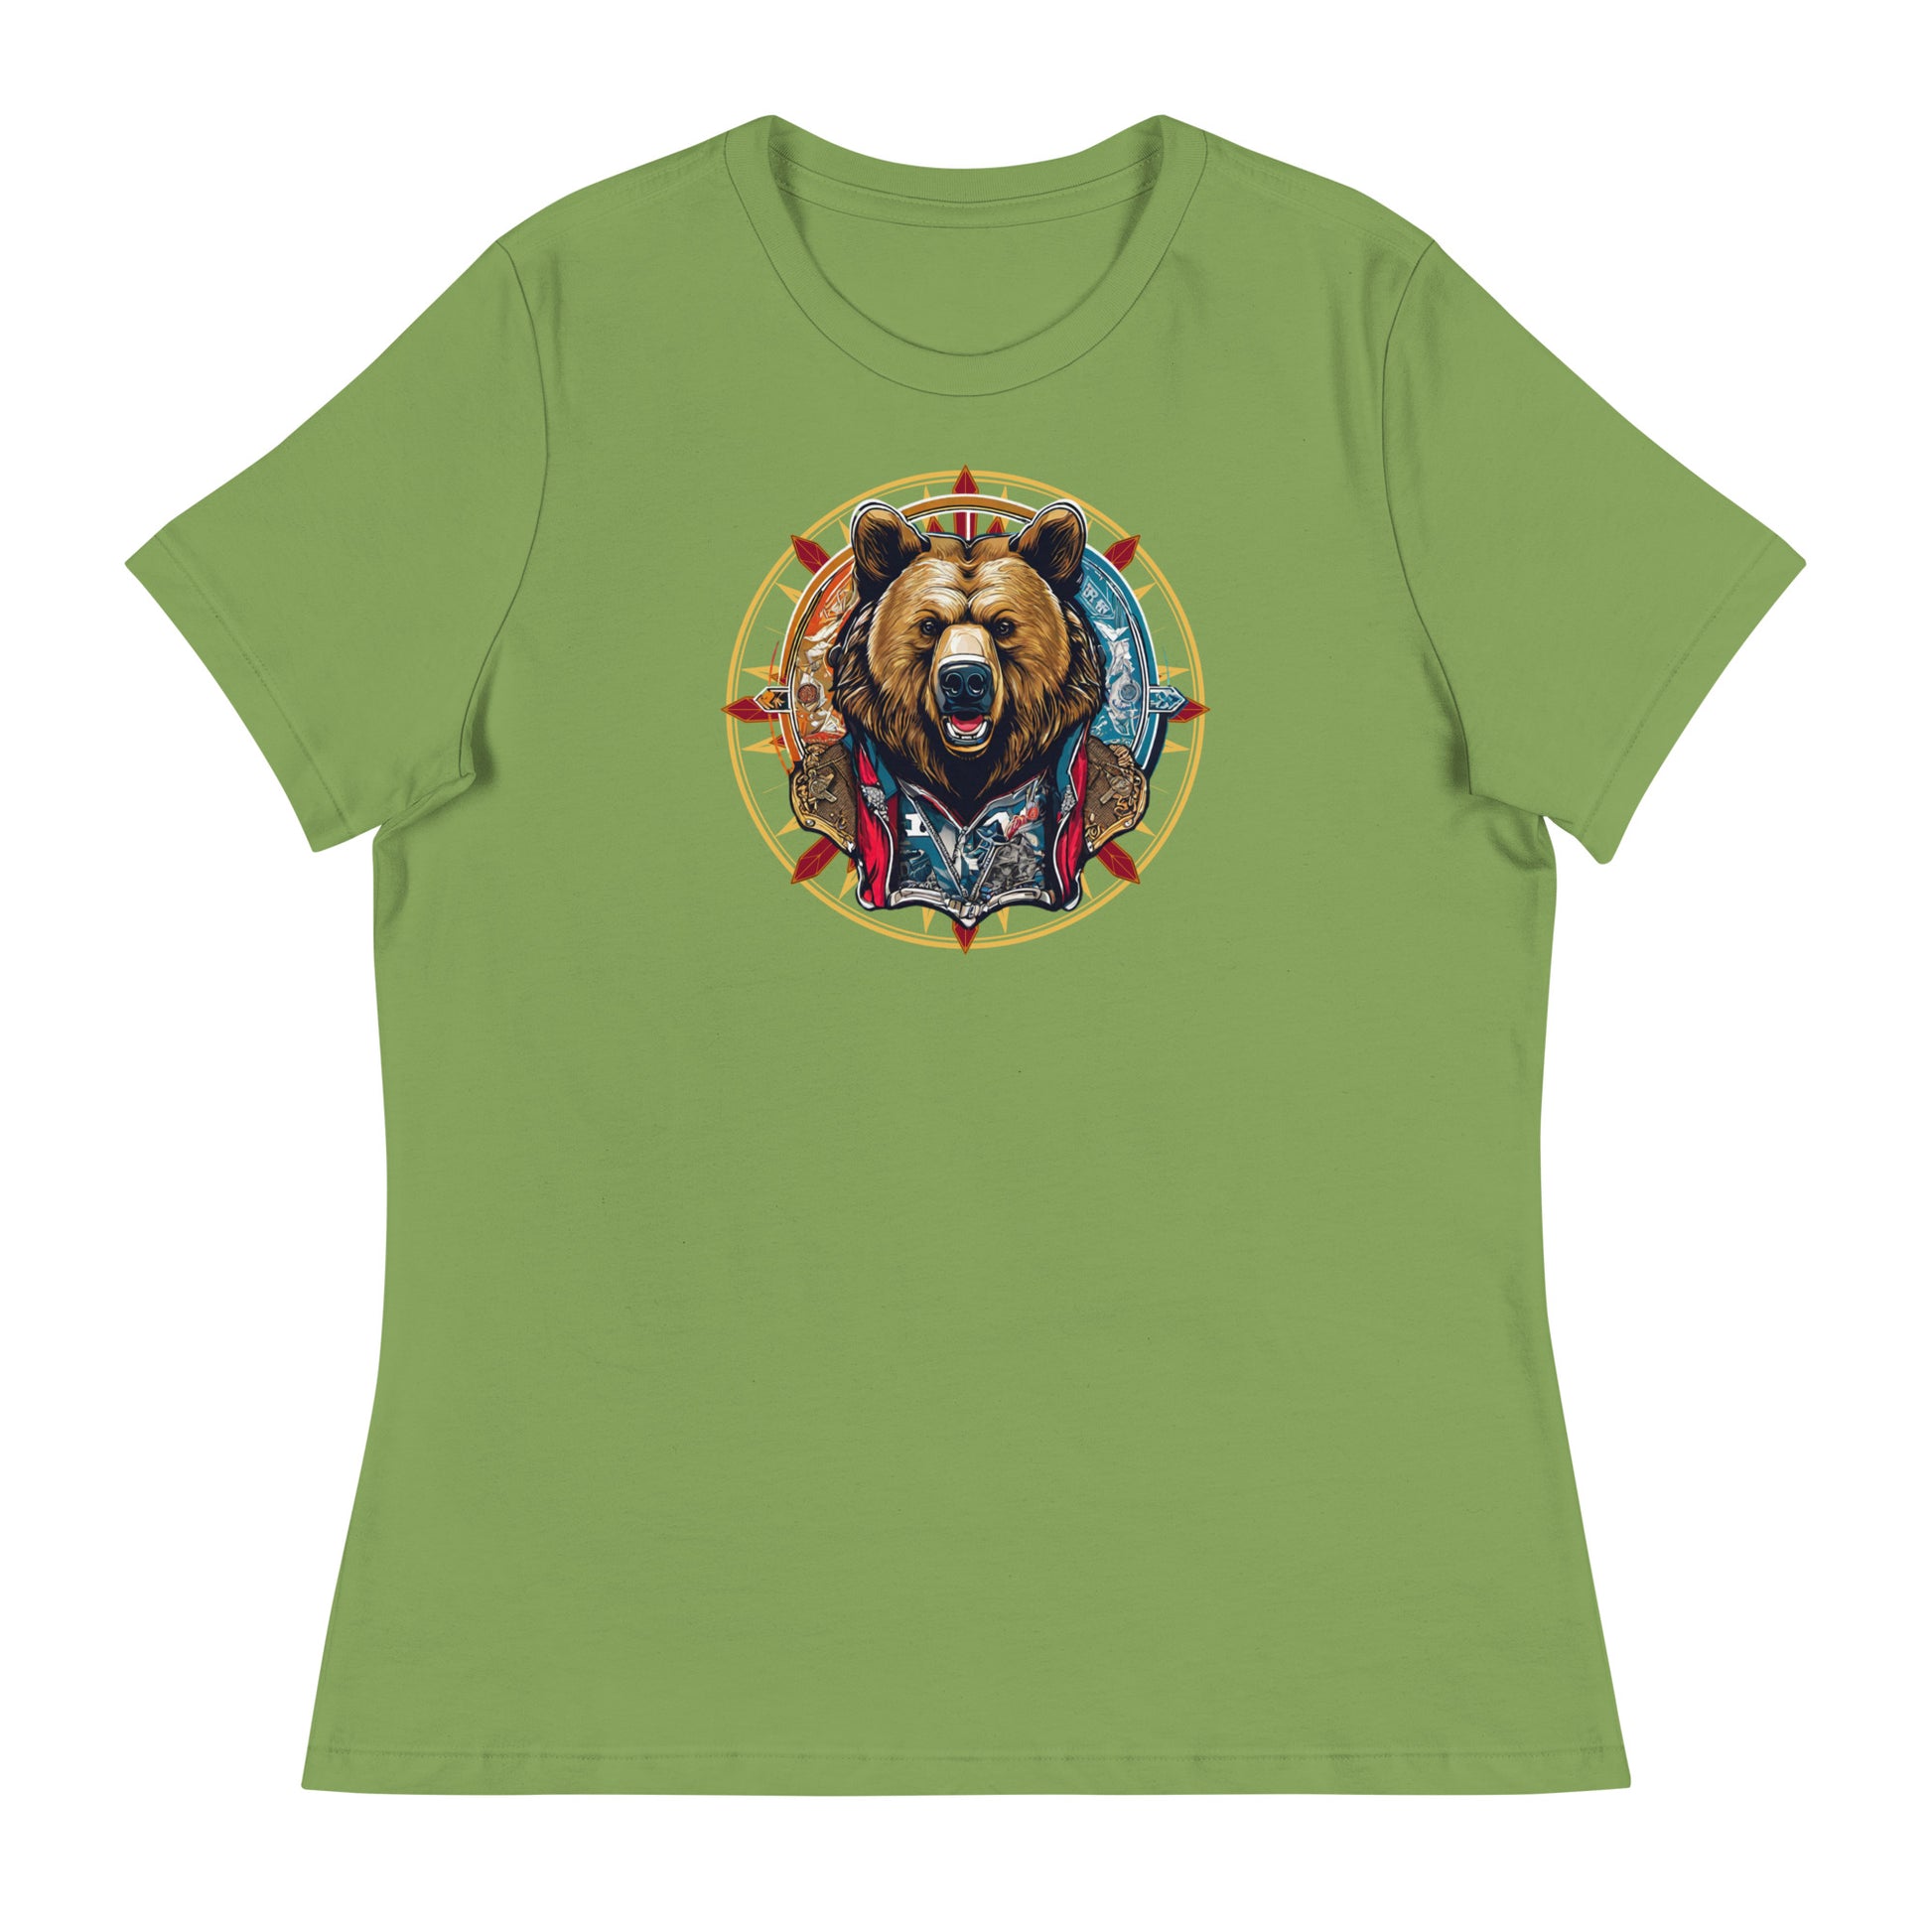 Bear Emblem Women's Graphic T-Shirt Leaf